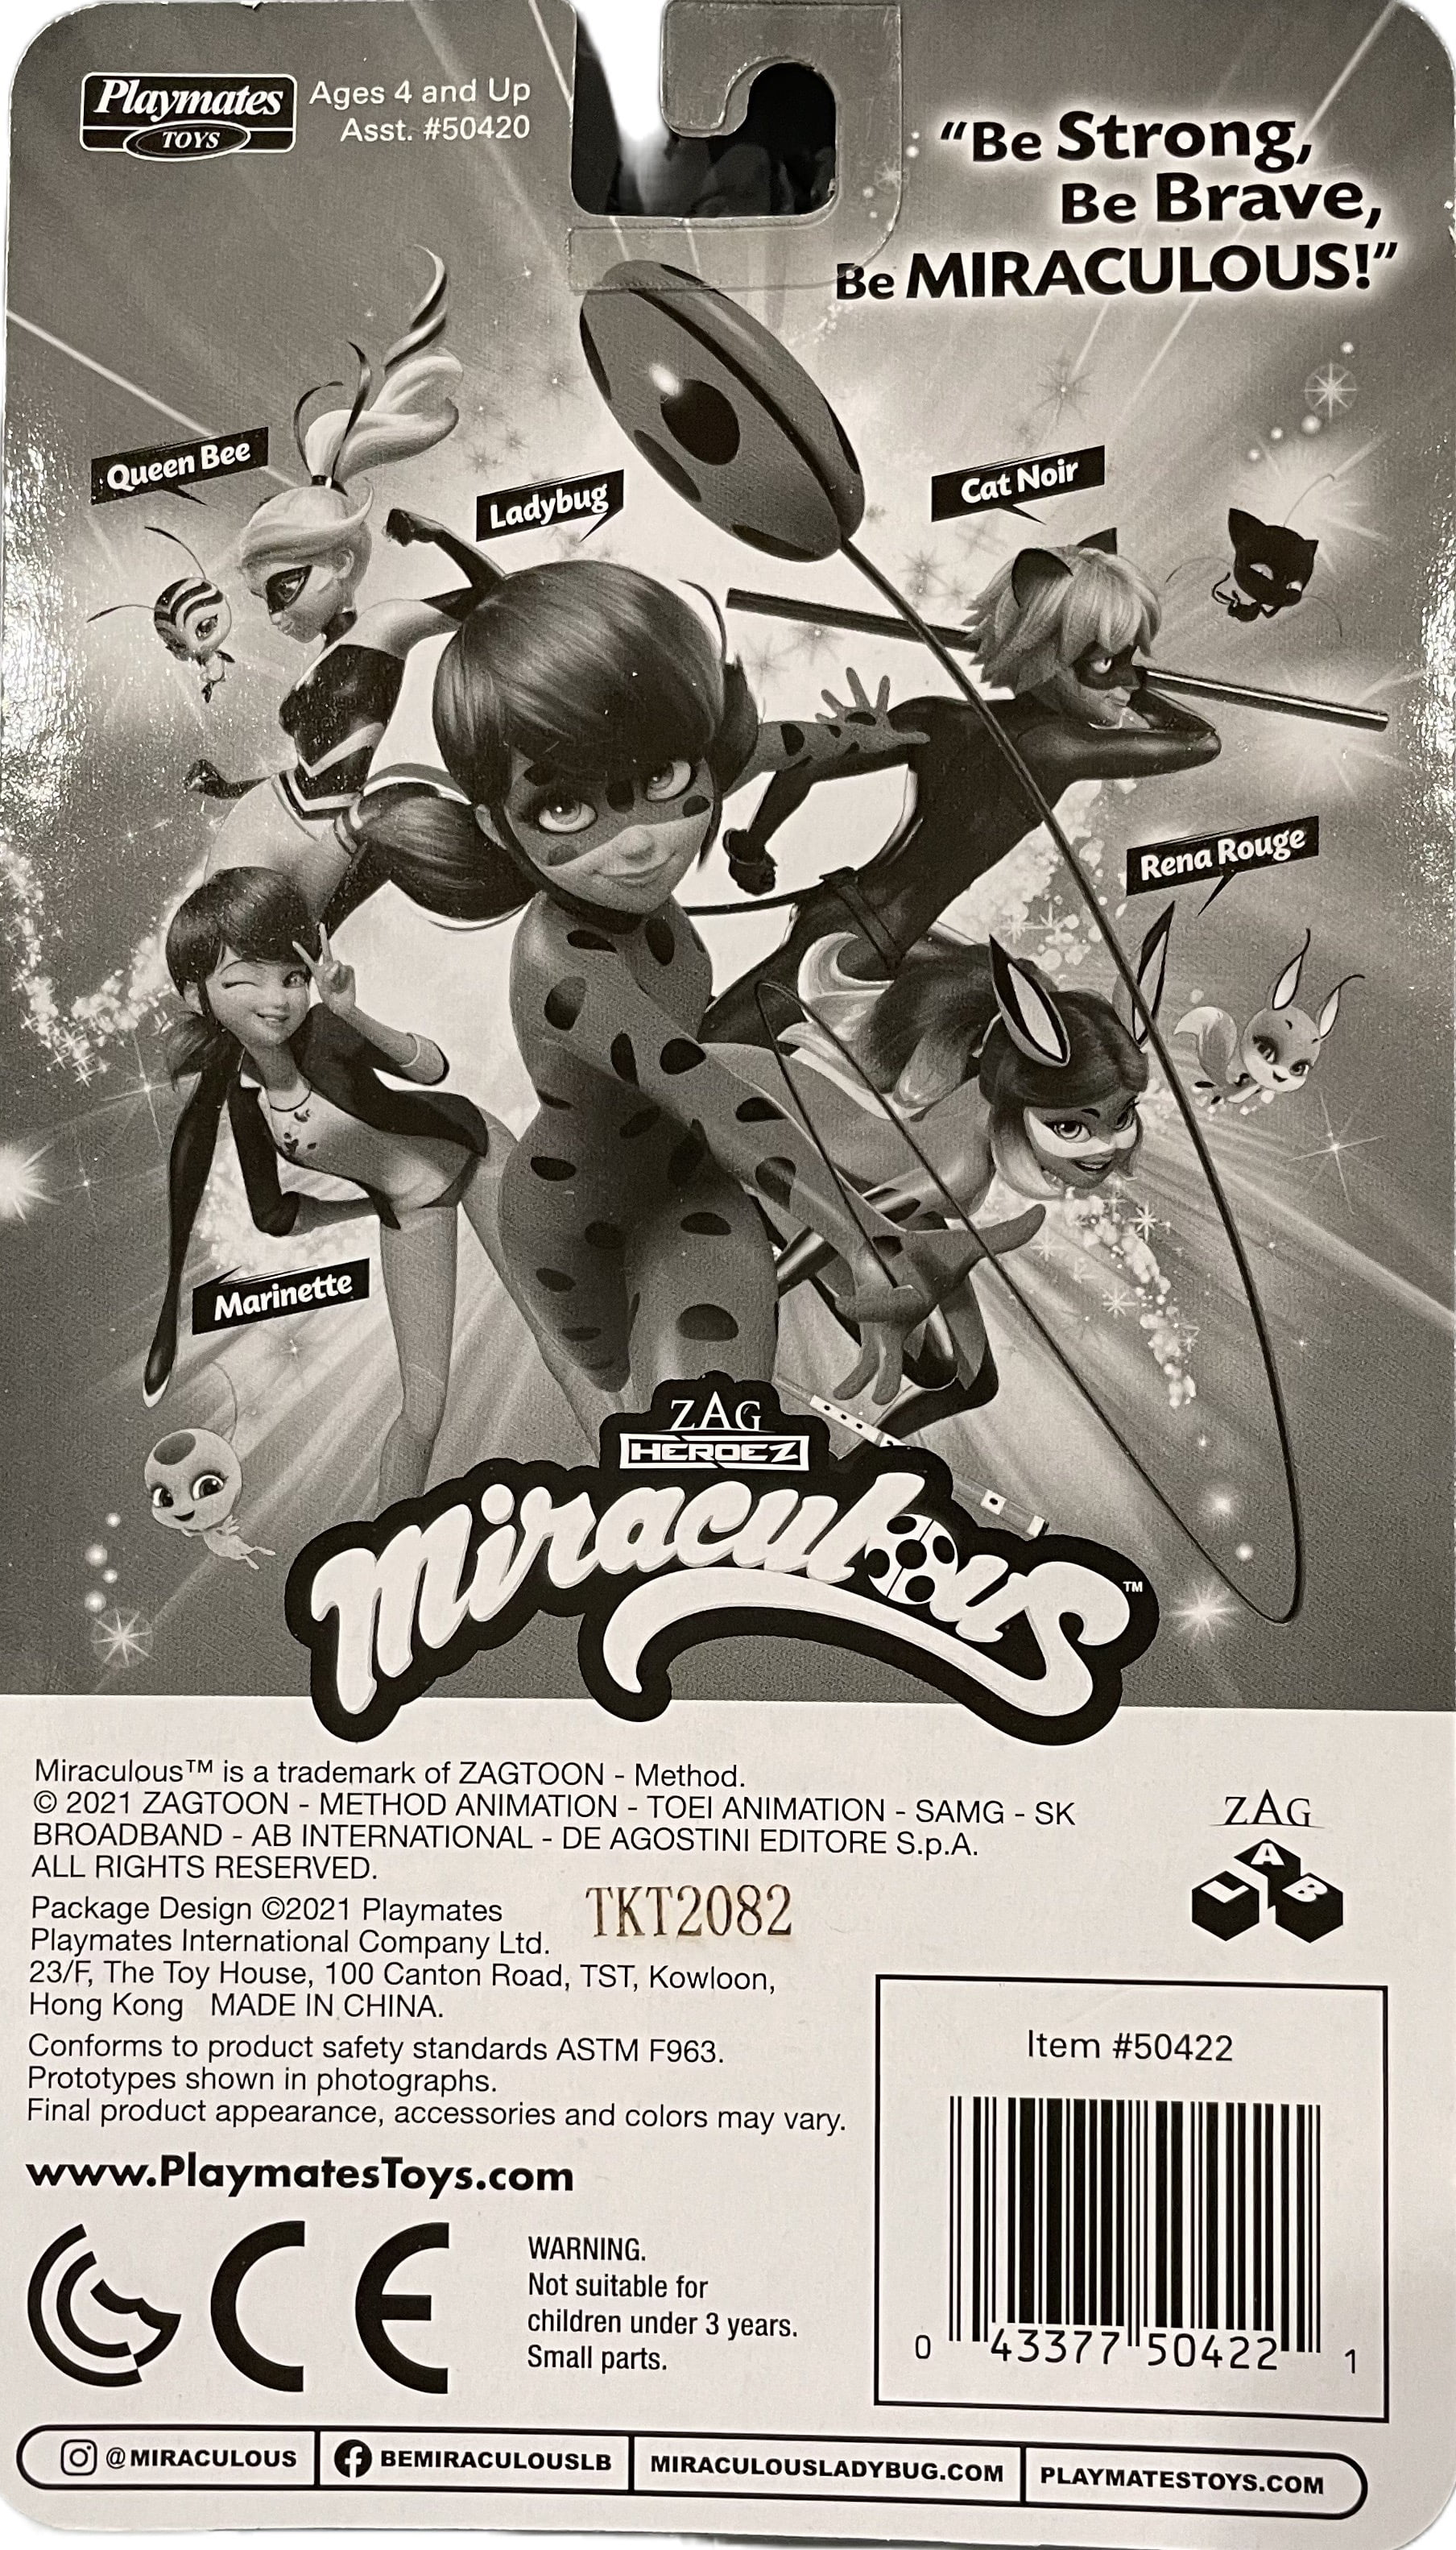 Boneco Cat Noir Miraculous The Movie Playmates Brinquedo 50015 em